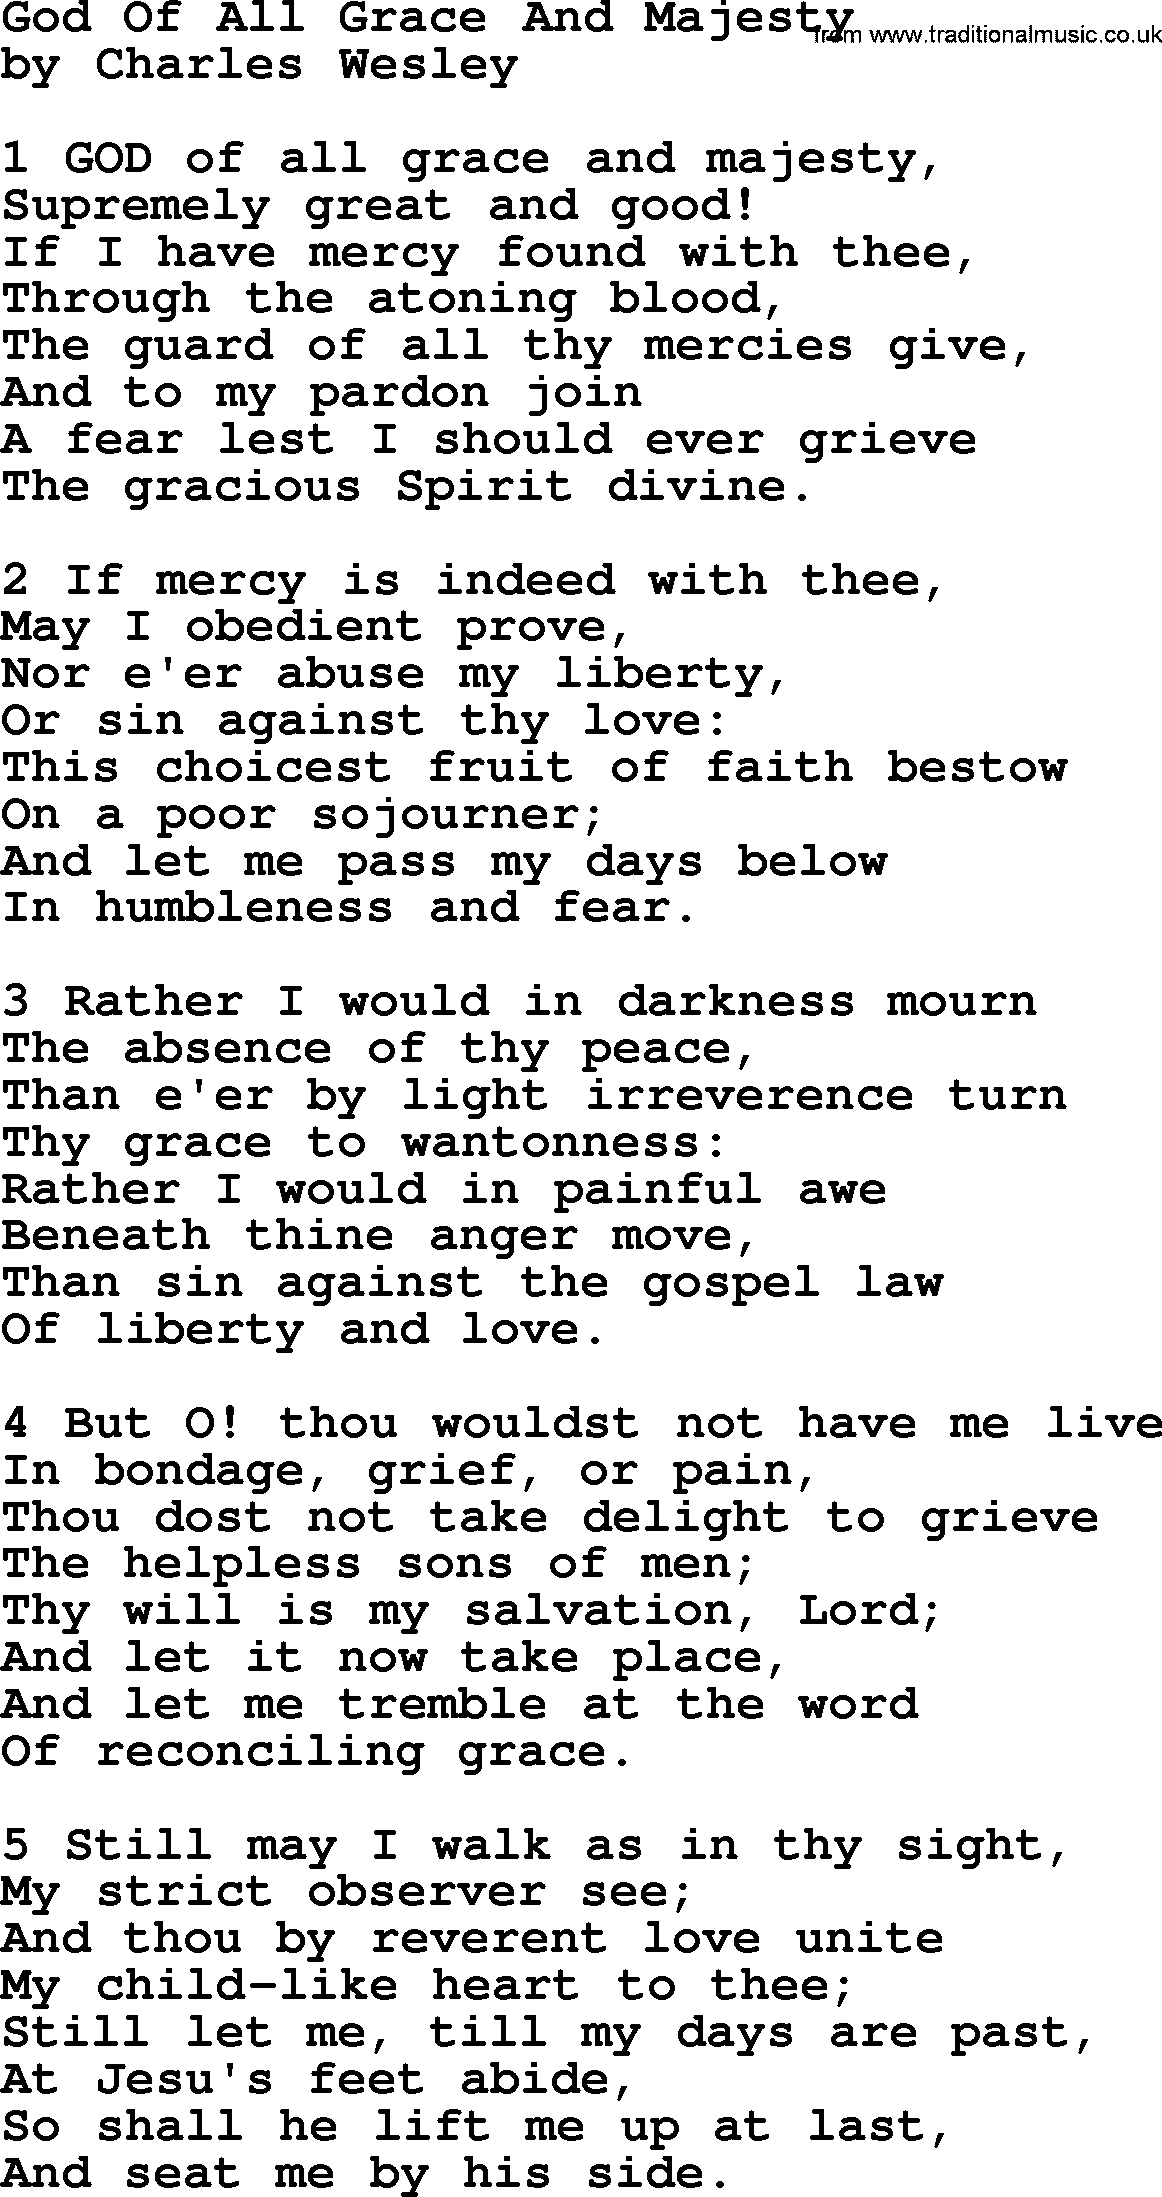 Charles Wesley hymn: God Of All Grace And Majesty, lyrics